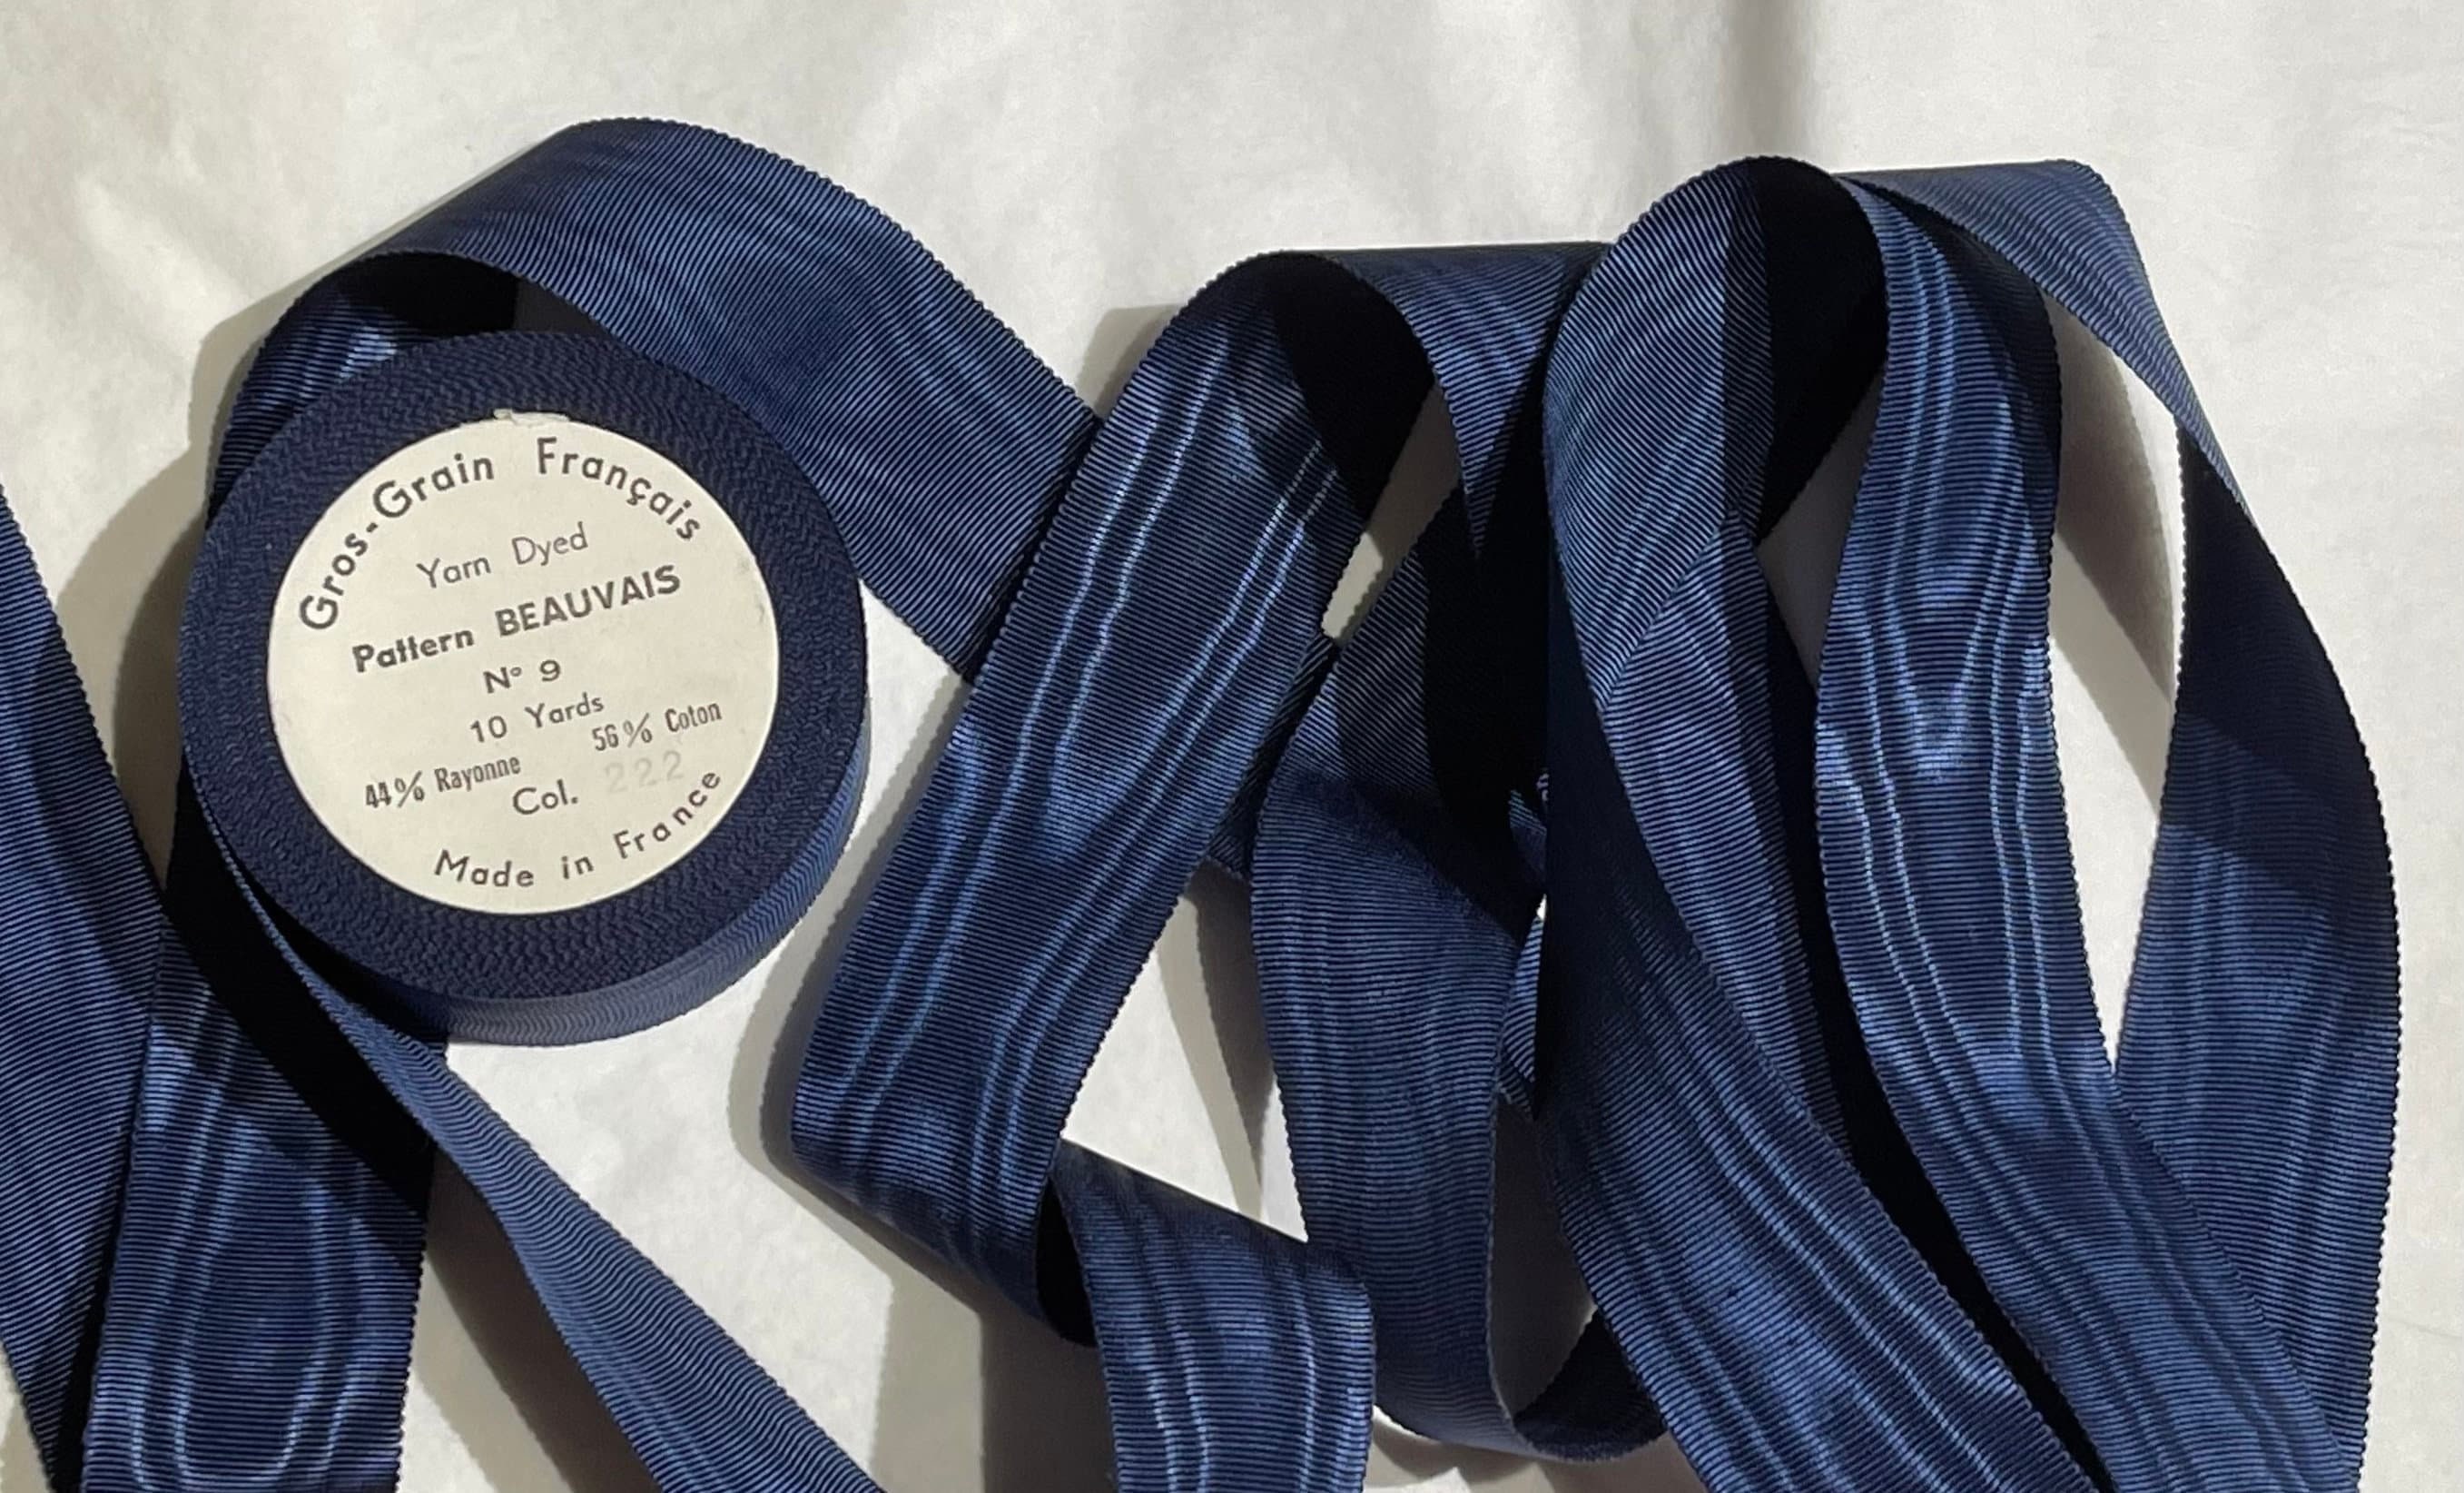 1-3/4 44mm Blue Cotton Rayon Petersham Grosgrain Ribbon 